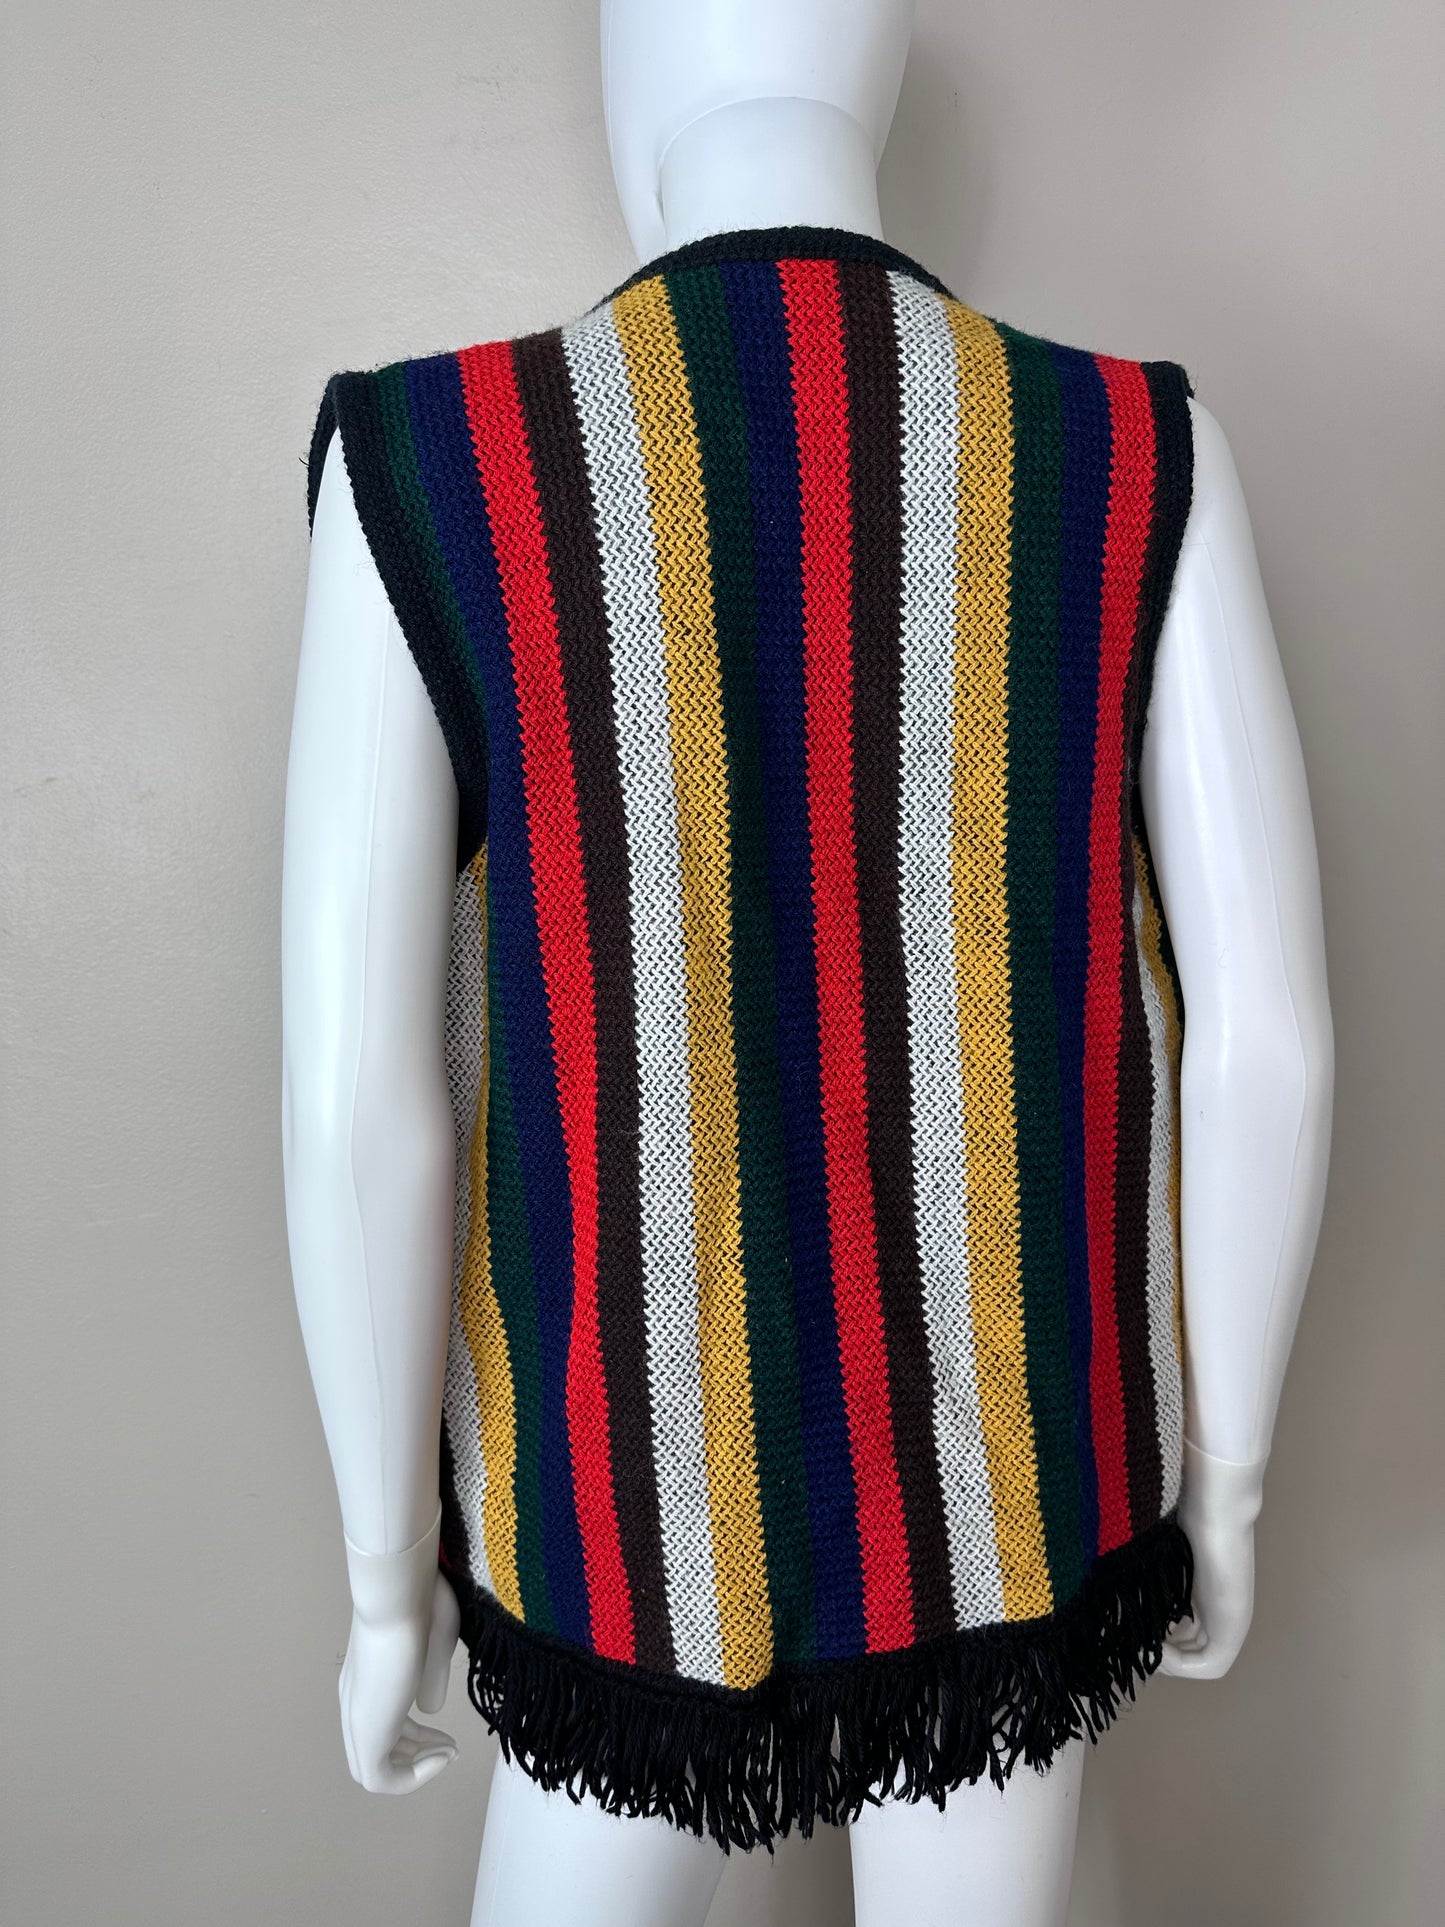 1970s Stripe Sweater Vest with Fringe, Sears Size Medium